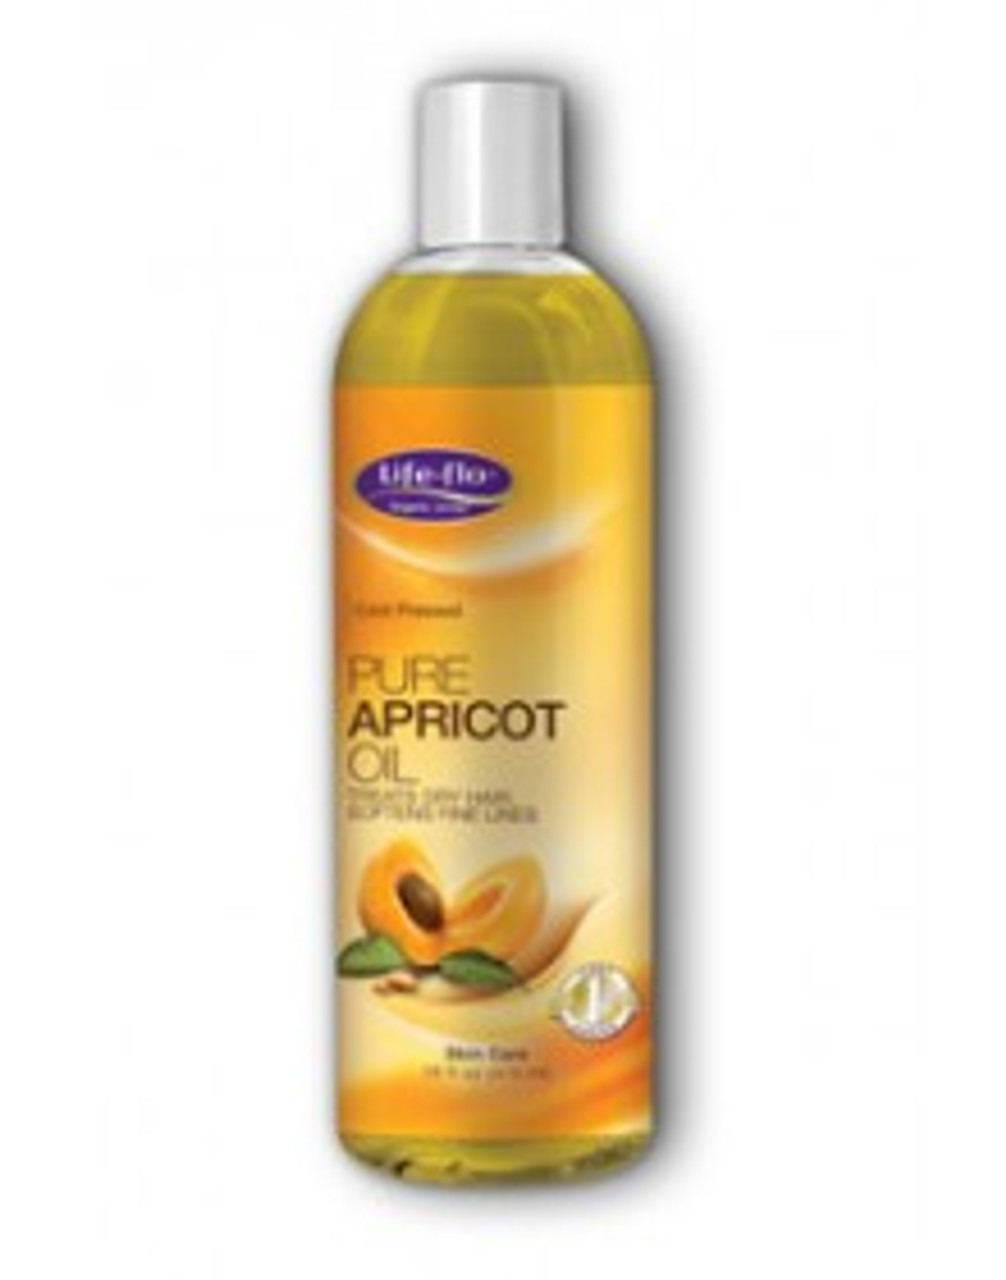 Life-flo 100% Pure Apricot Oil 16oz